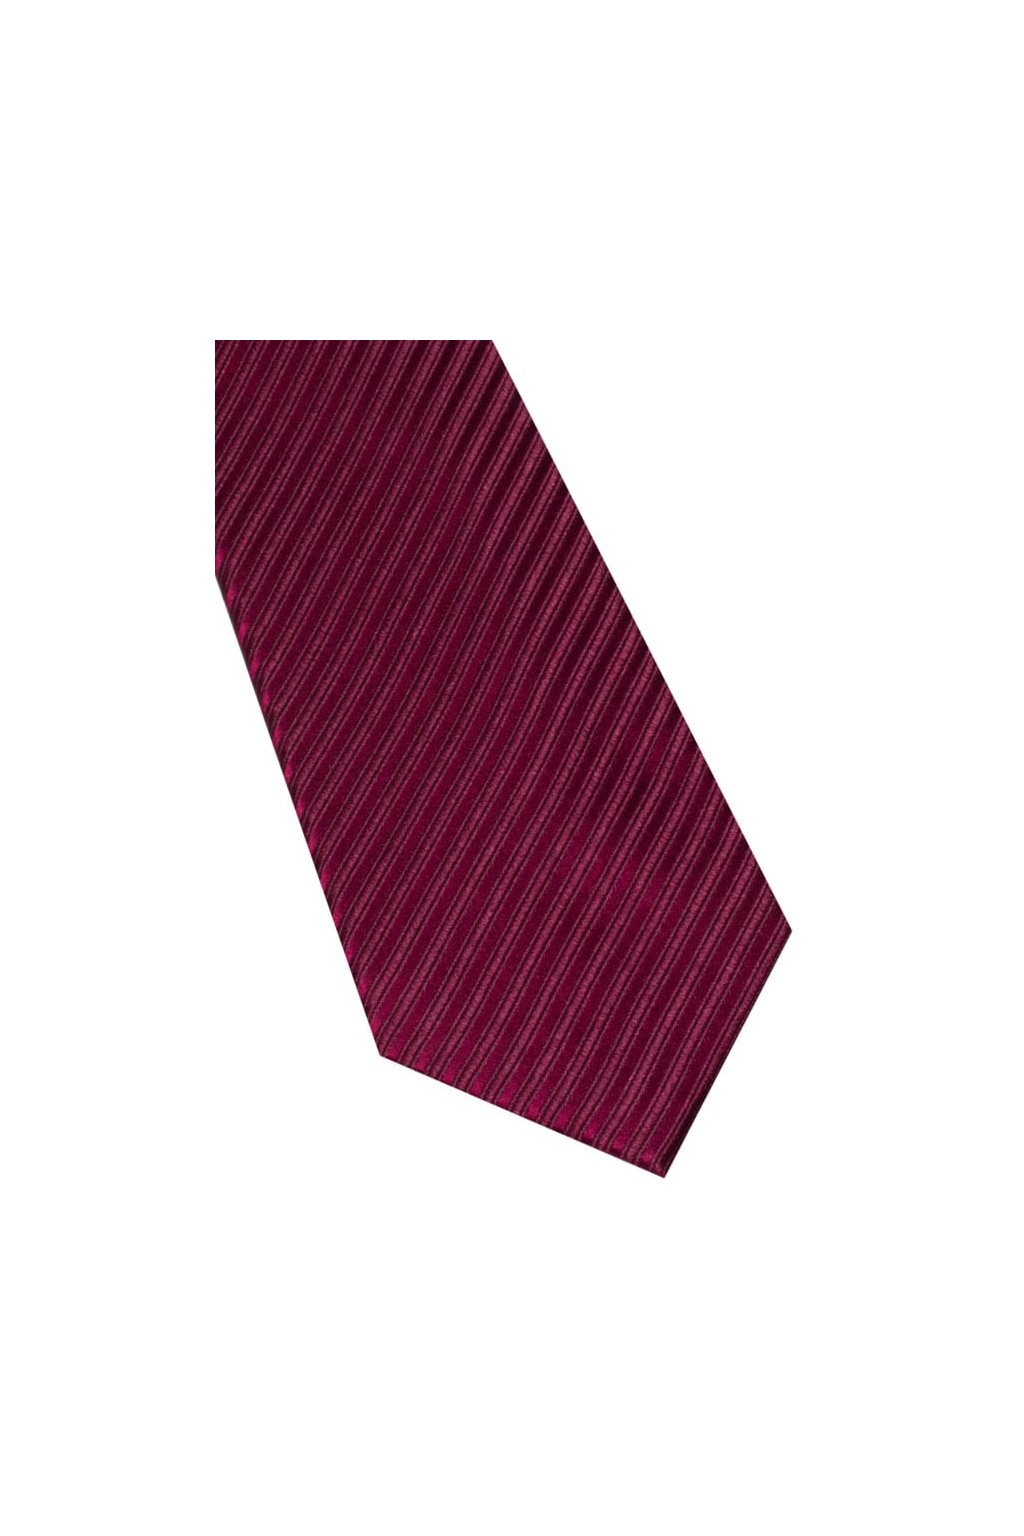 Hedvábná kravata Eterna - pruhovaná bordó